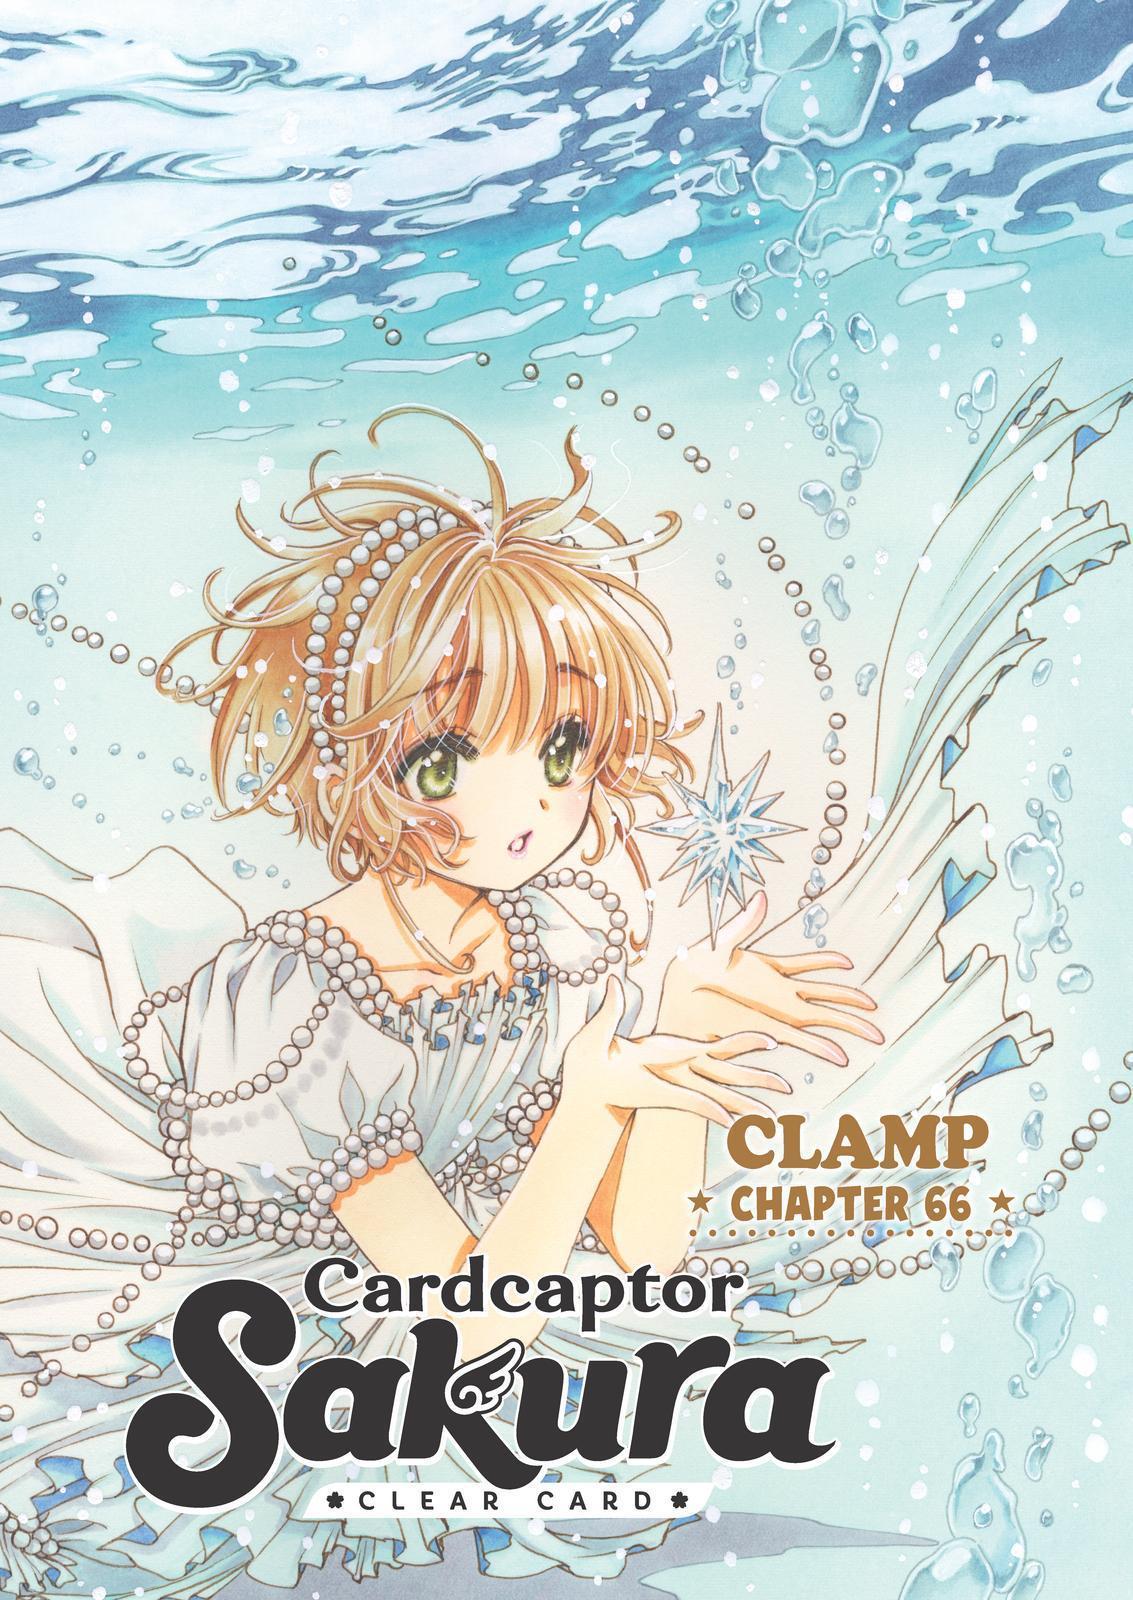 Read Cardcaptor Sakura - Clear Card Arc Chapter 70 on Mangakakalot